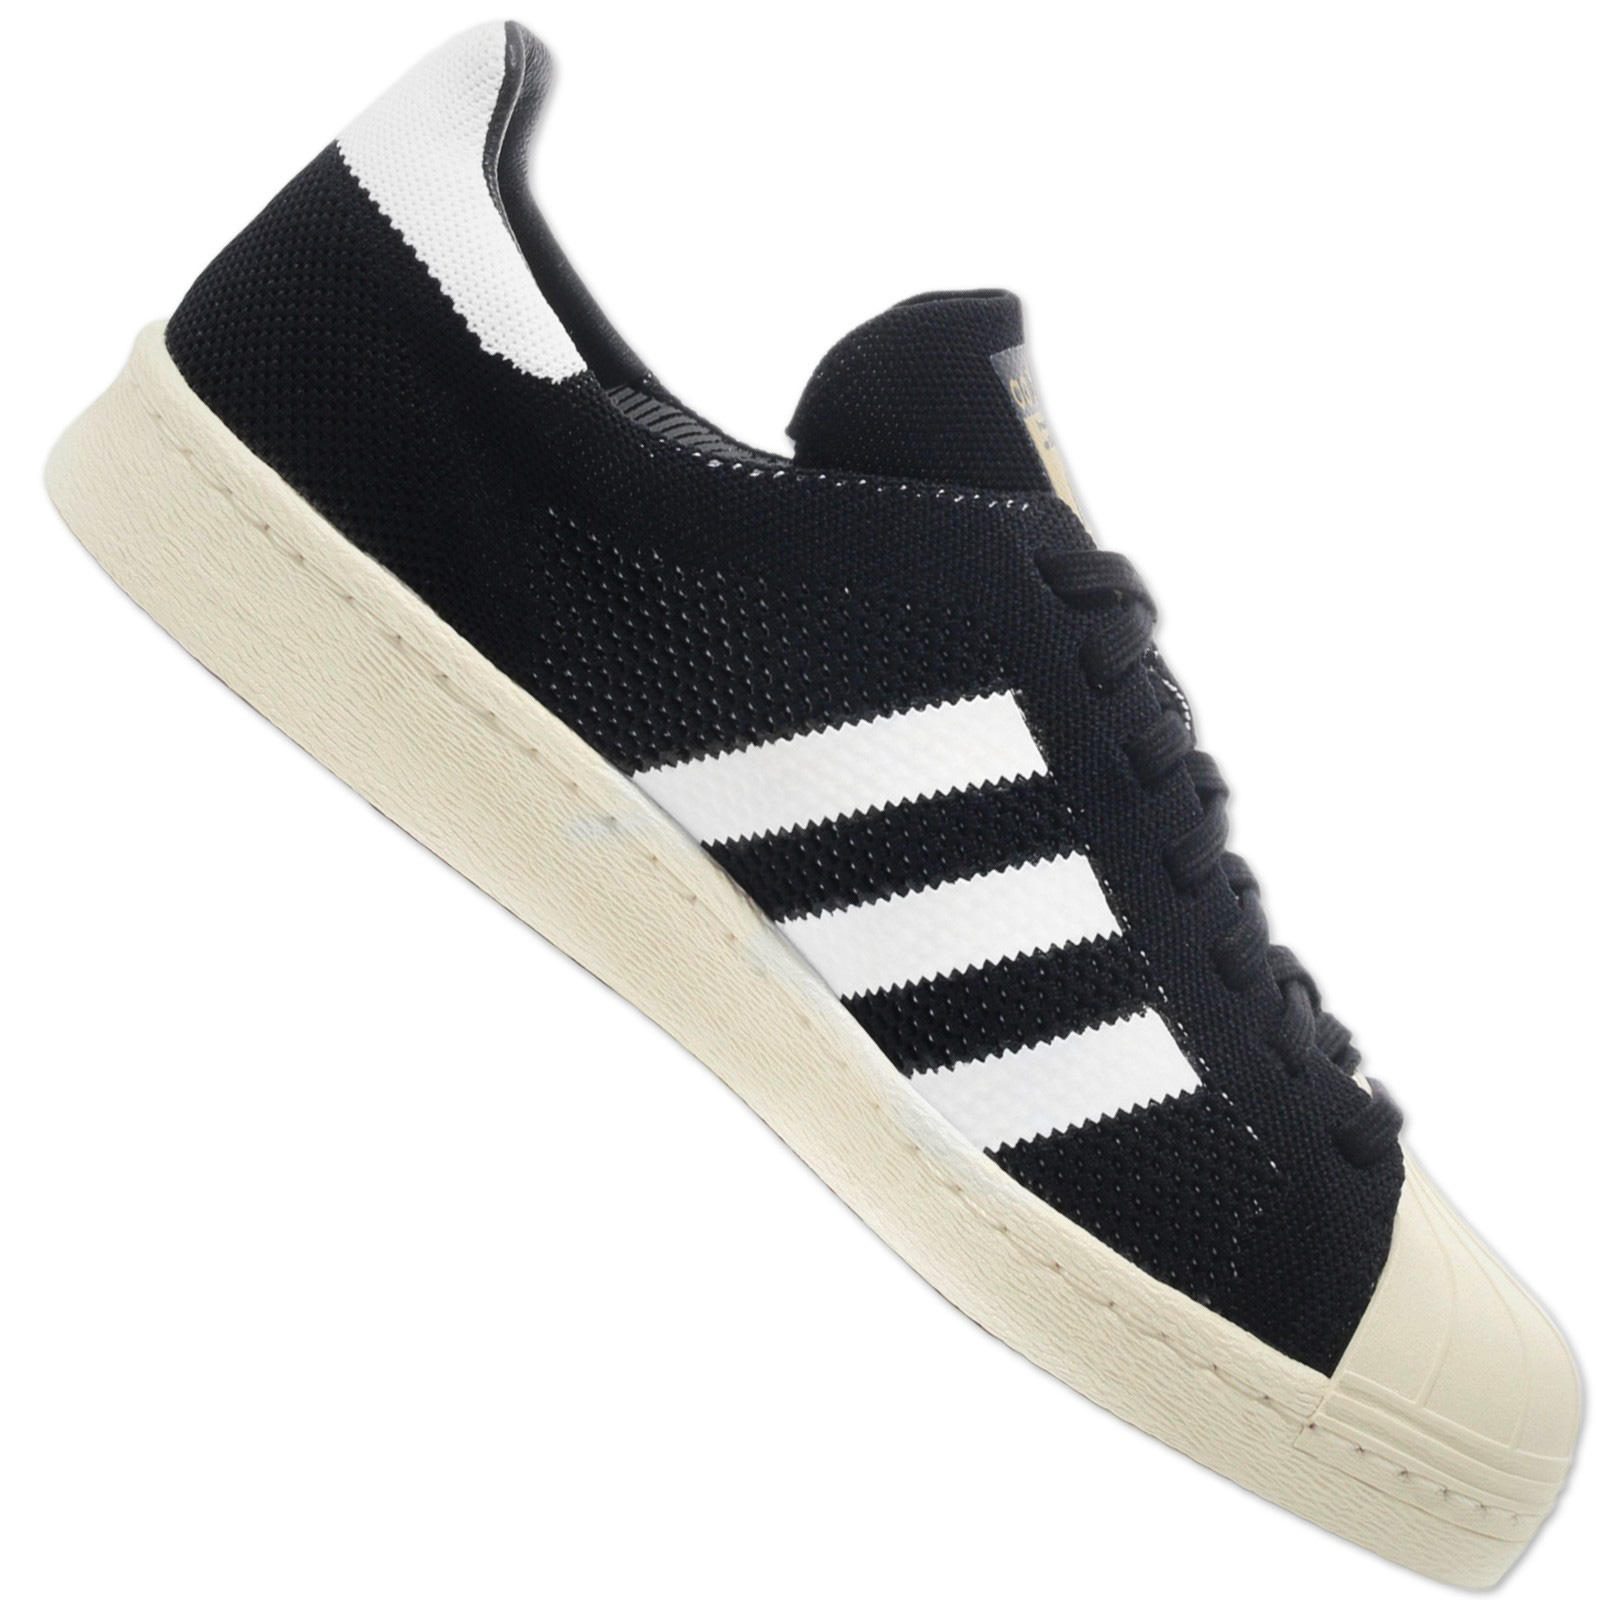 Adidas Originals Superstar 80s Primo Primeknit Scarpe Sneaker S82780 Nero |  eBay